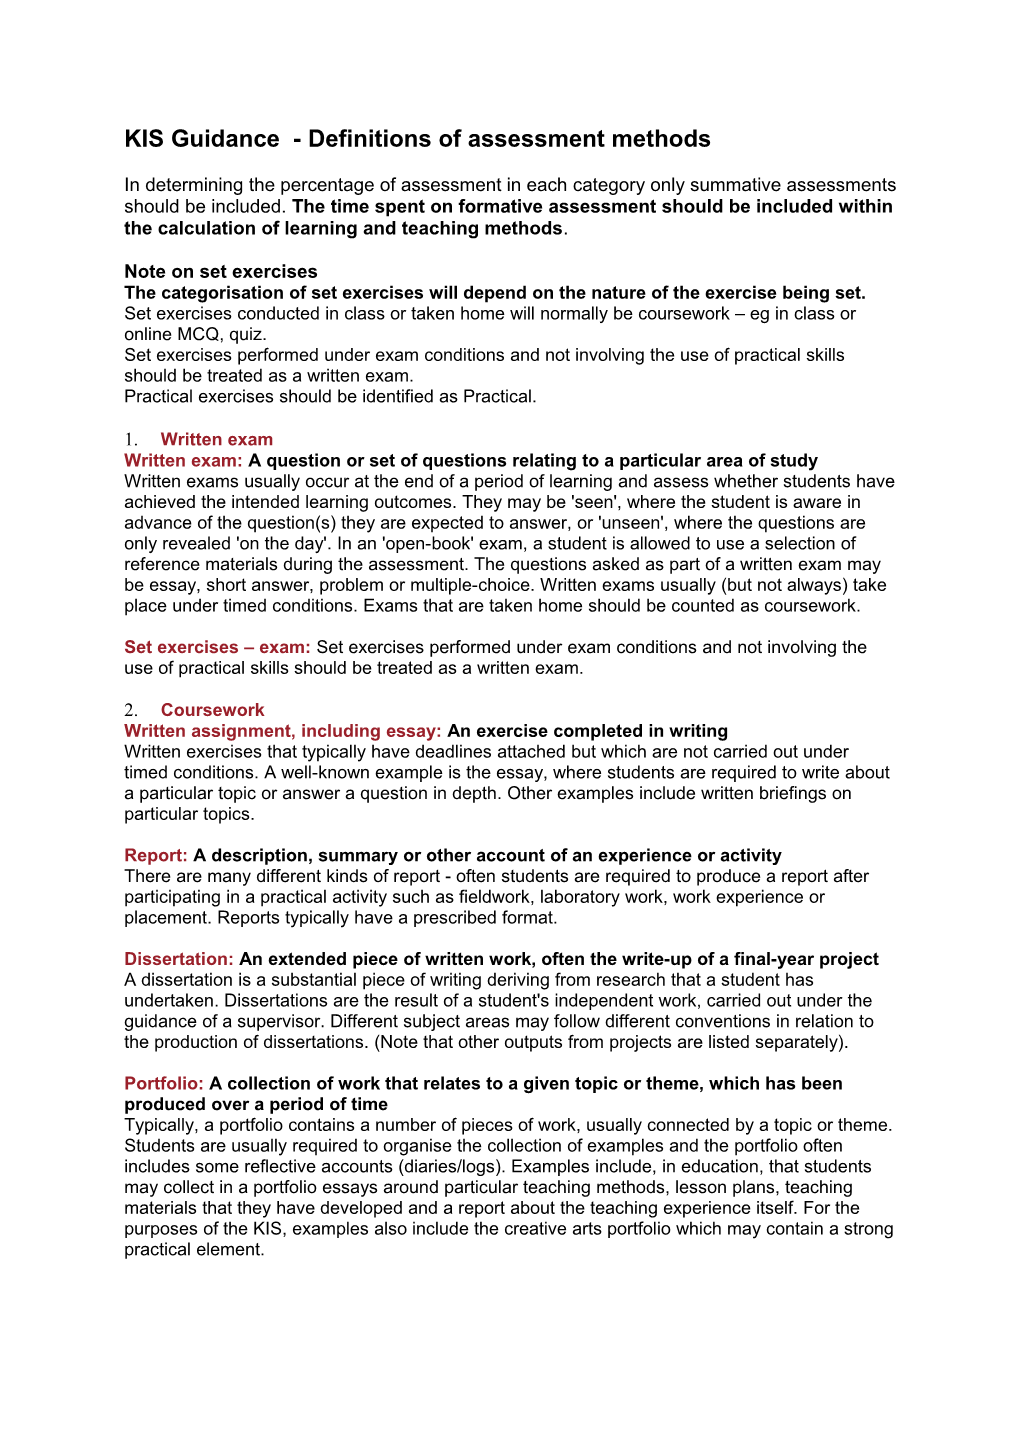 KIS Guidance - Definitions of Assessment Methods